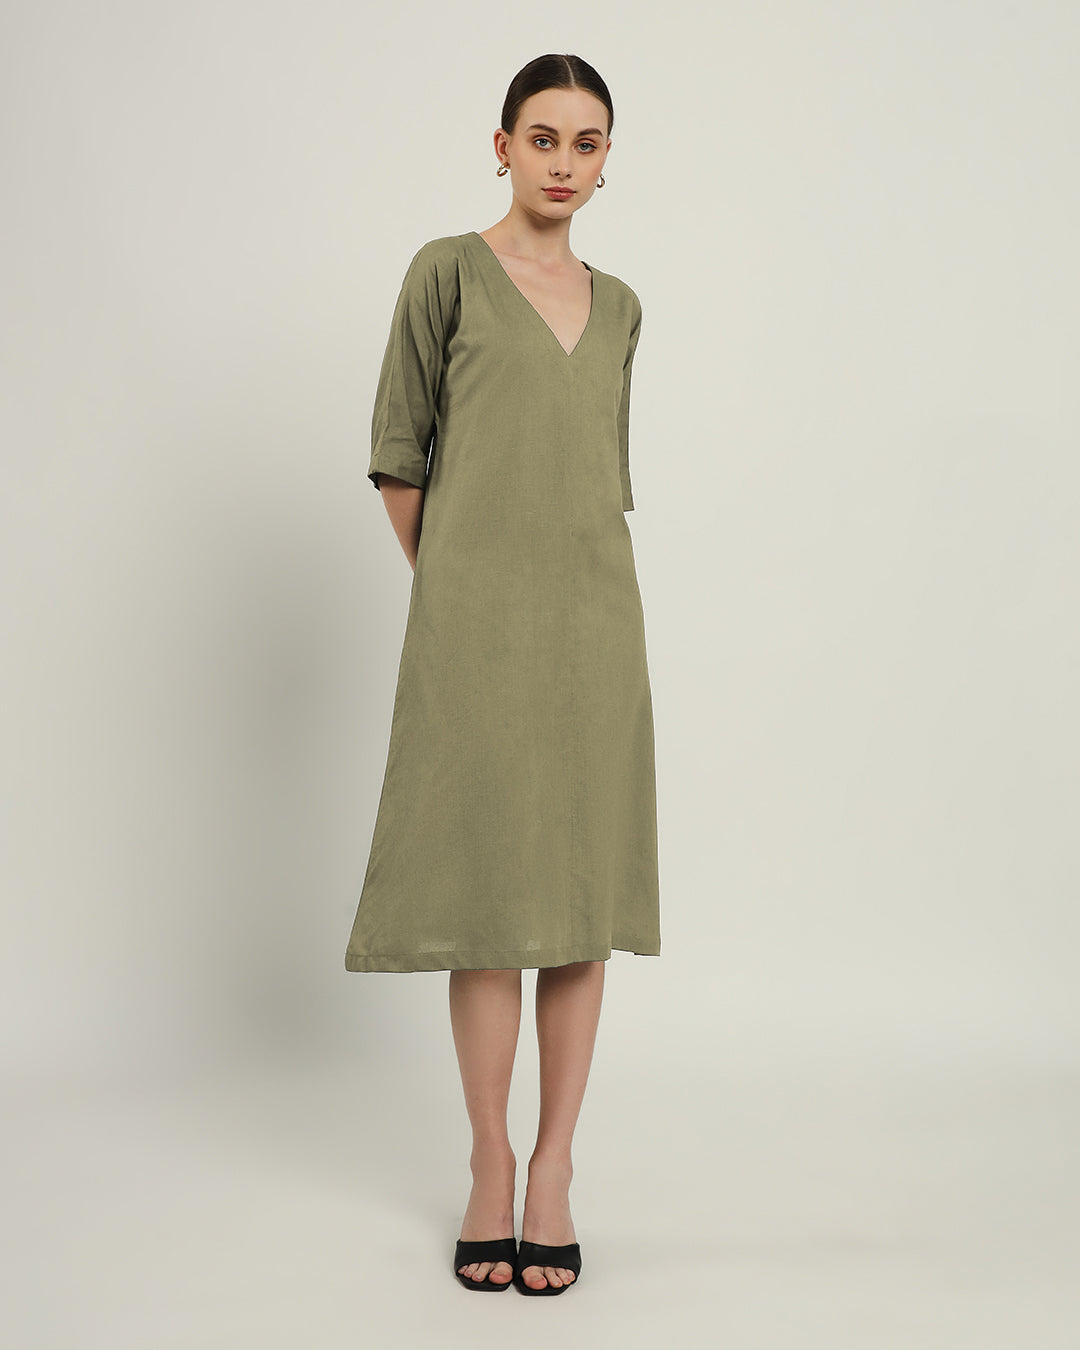 The Mildura Daisy Olive Linen Dress